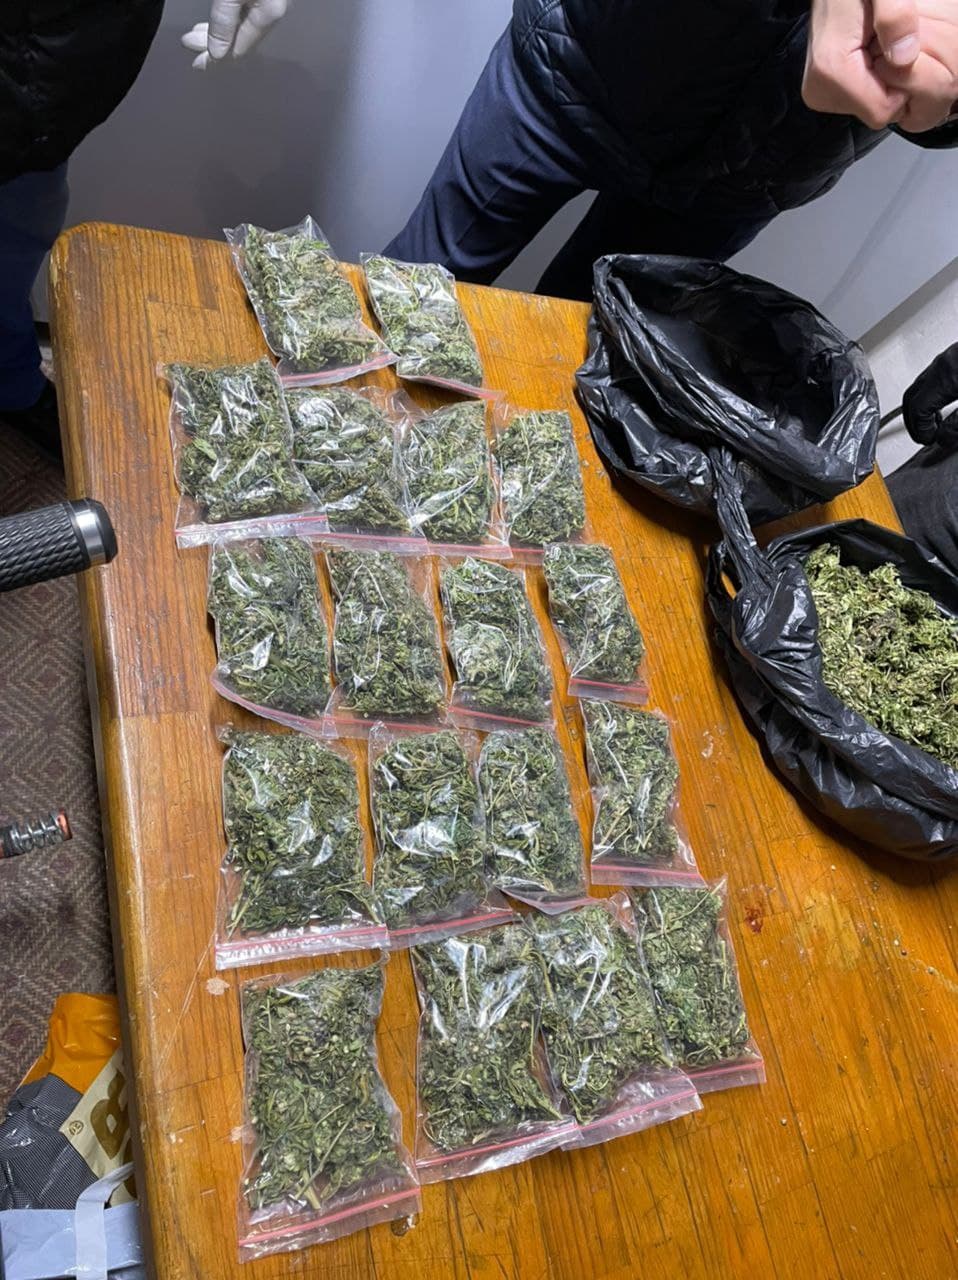 Seizure of Large Consignment of "Marijuana"